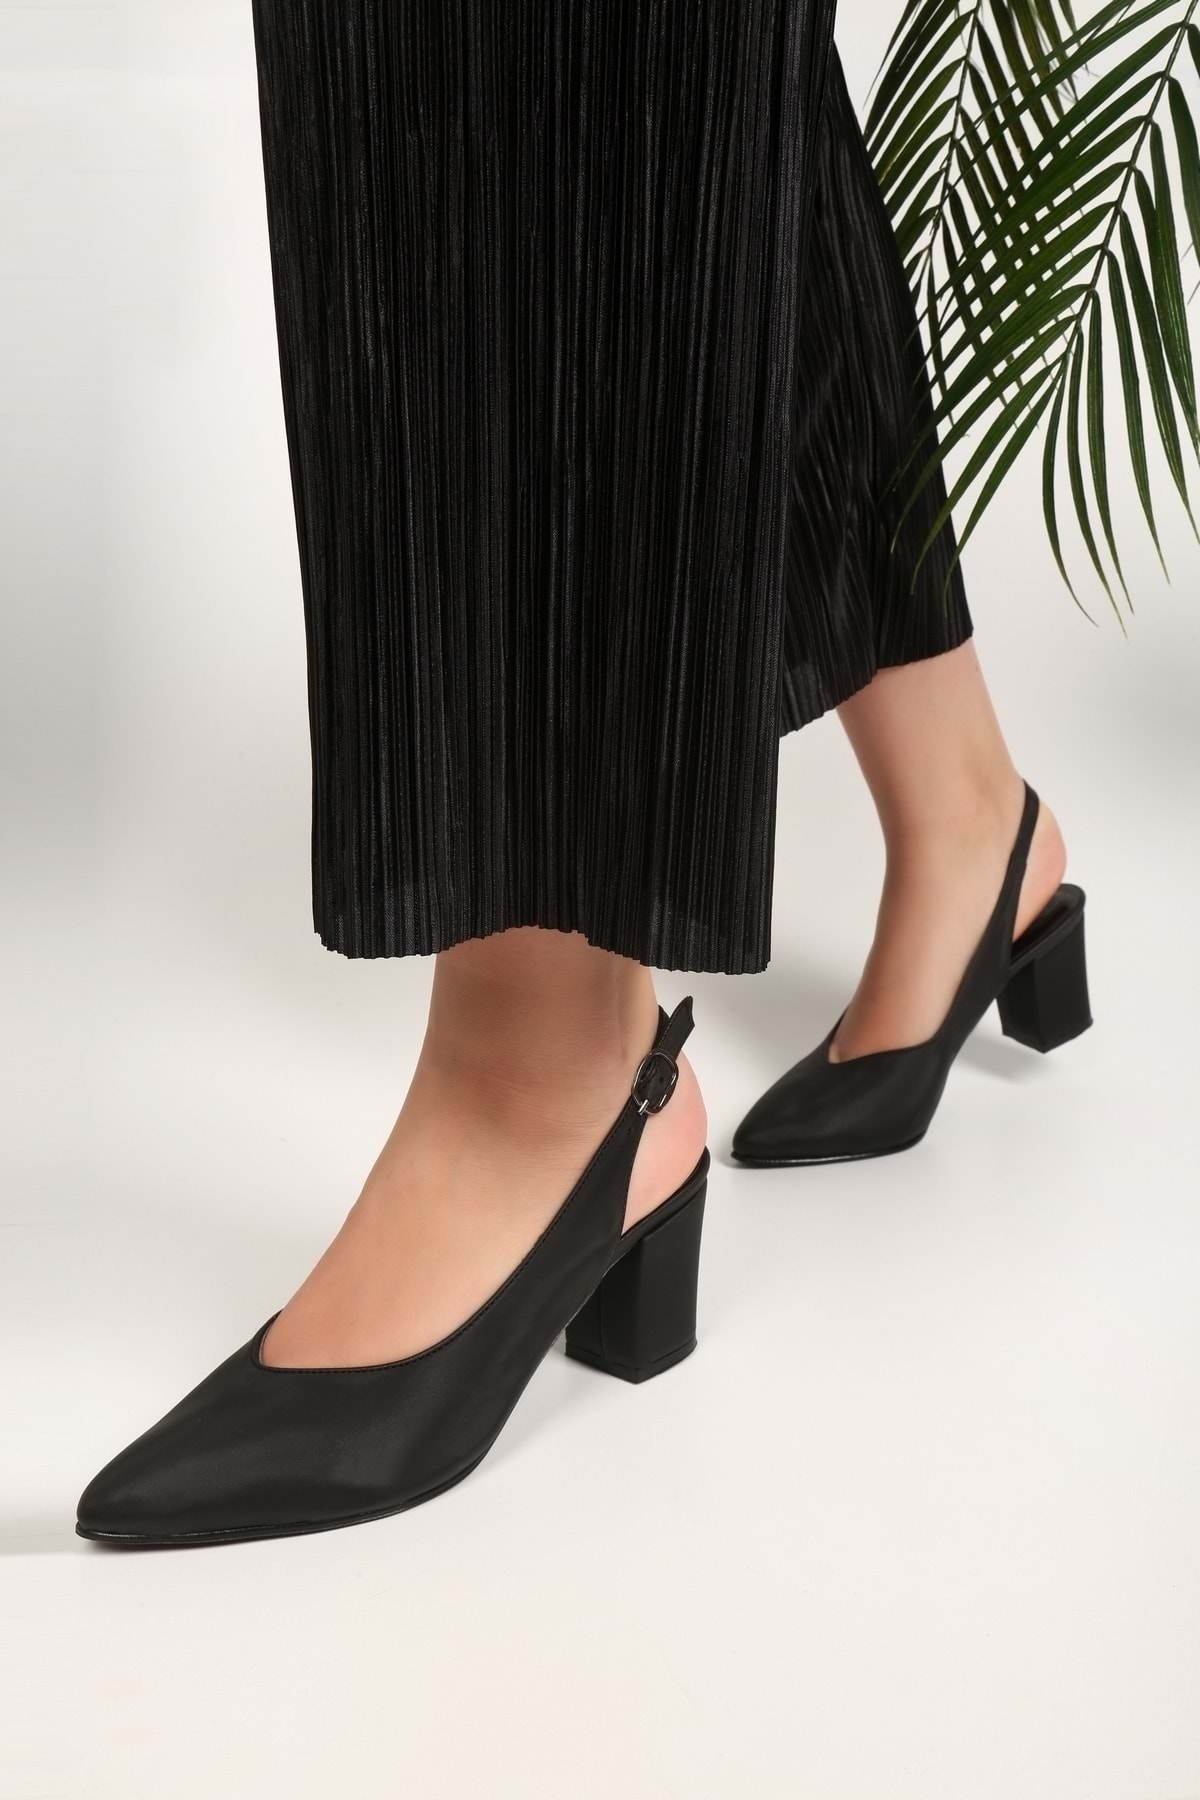 Shoeberry Women's Mandy Black Satin Heels Shoes